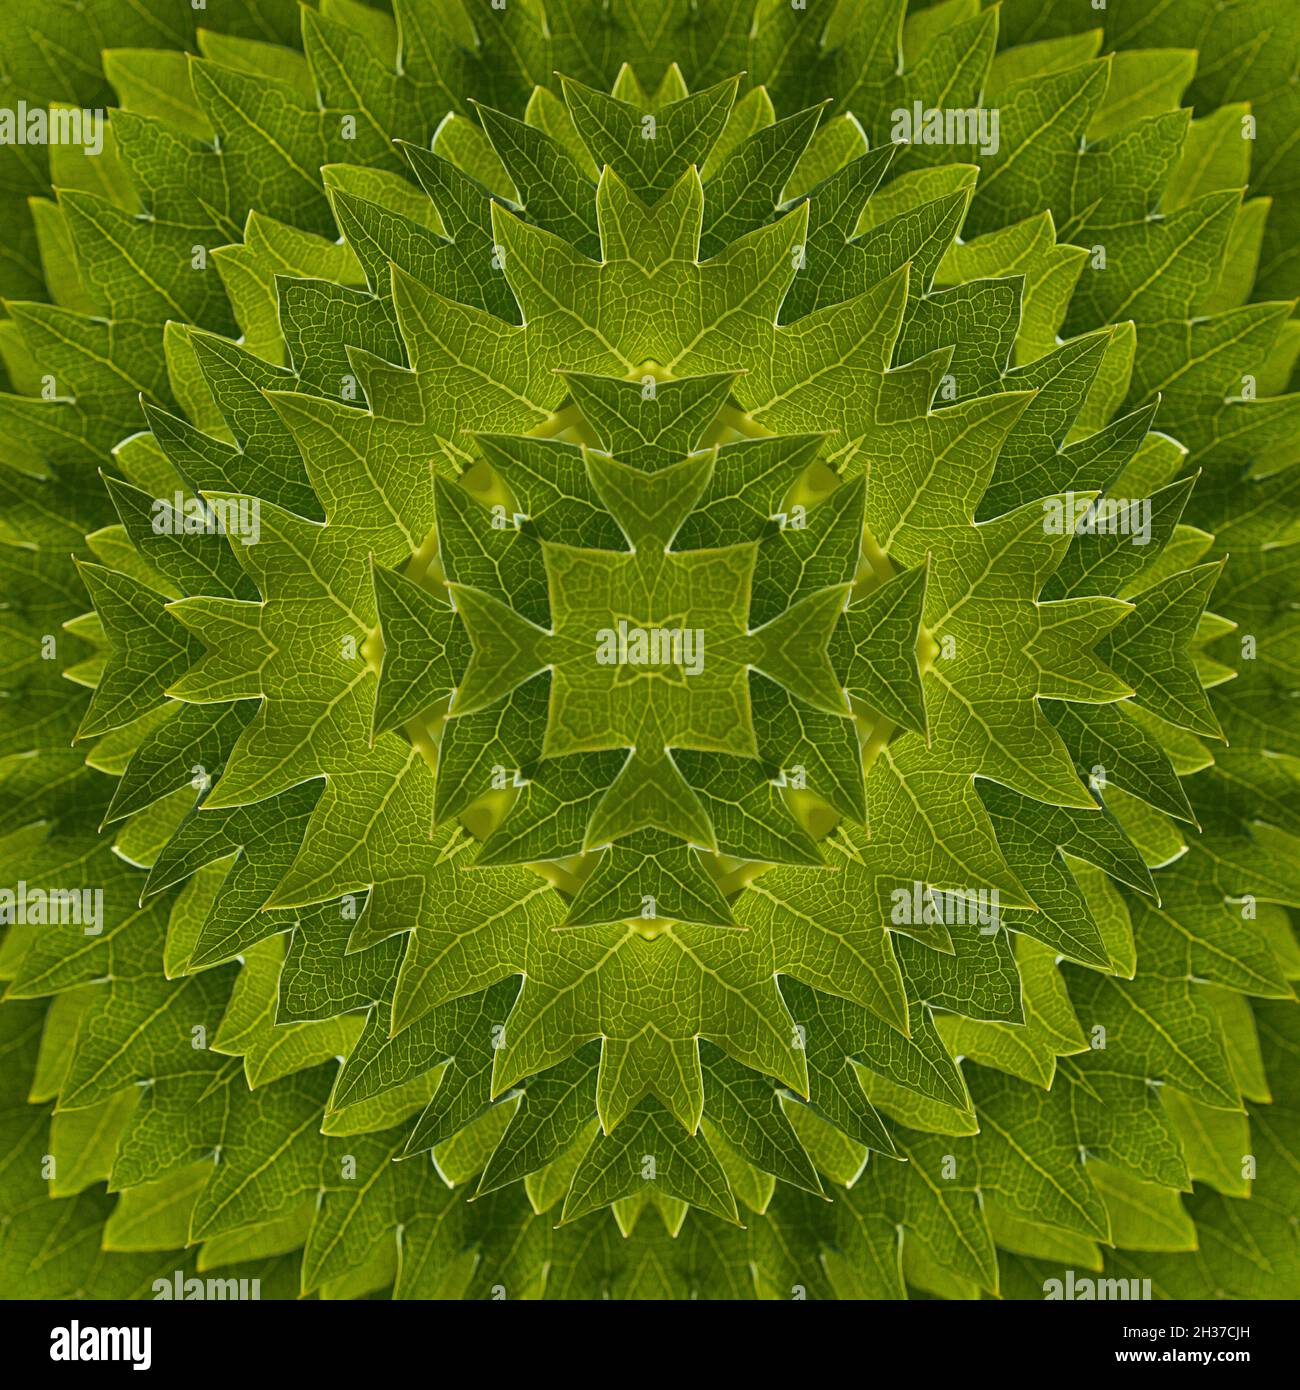 Kaleidoscope of green leaves Stock Photo